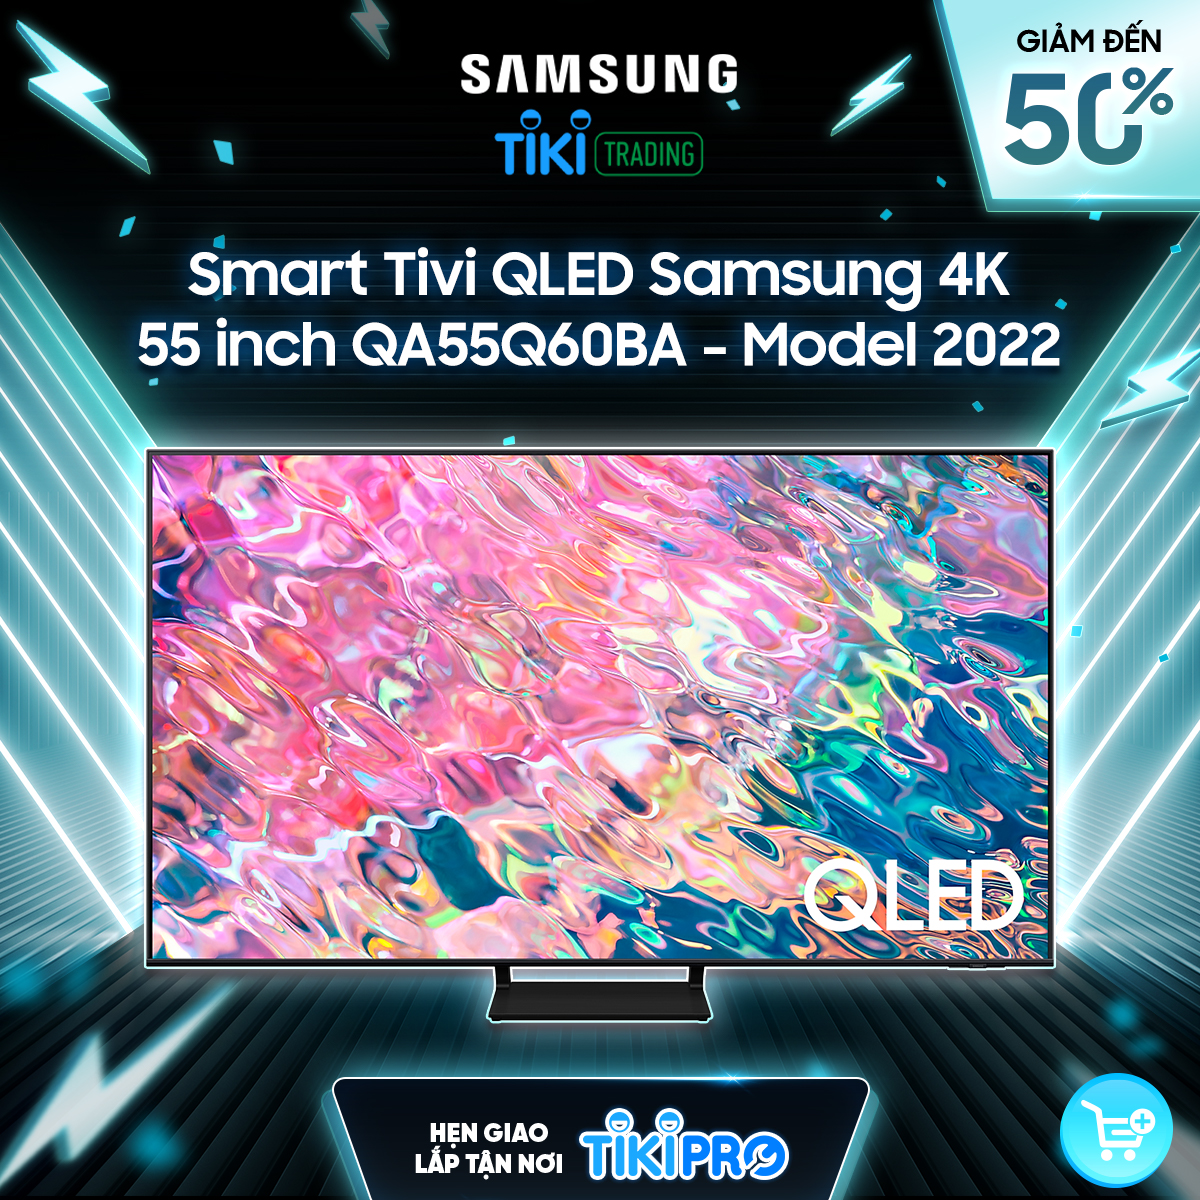 Smart Tivi QLED Samsung 4K 55 inch QA55Q60BA - Model 2022